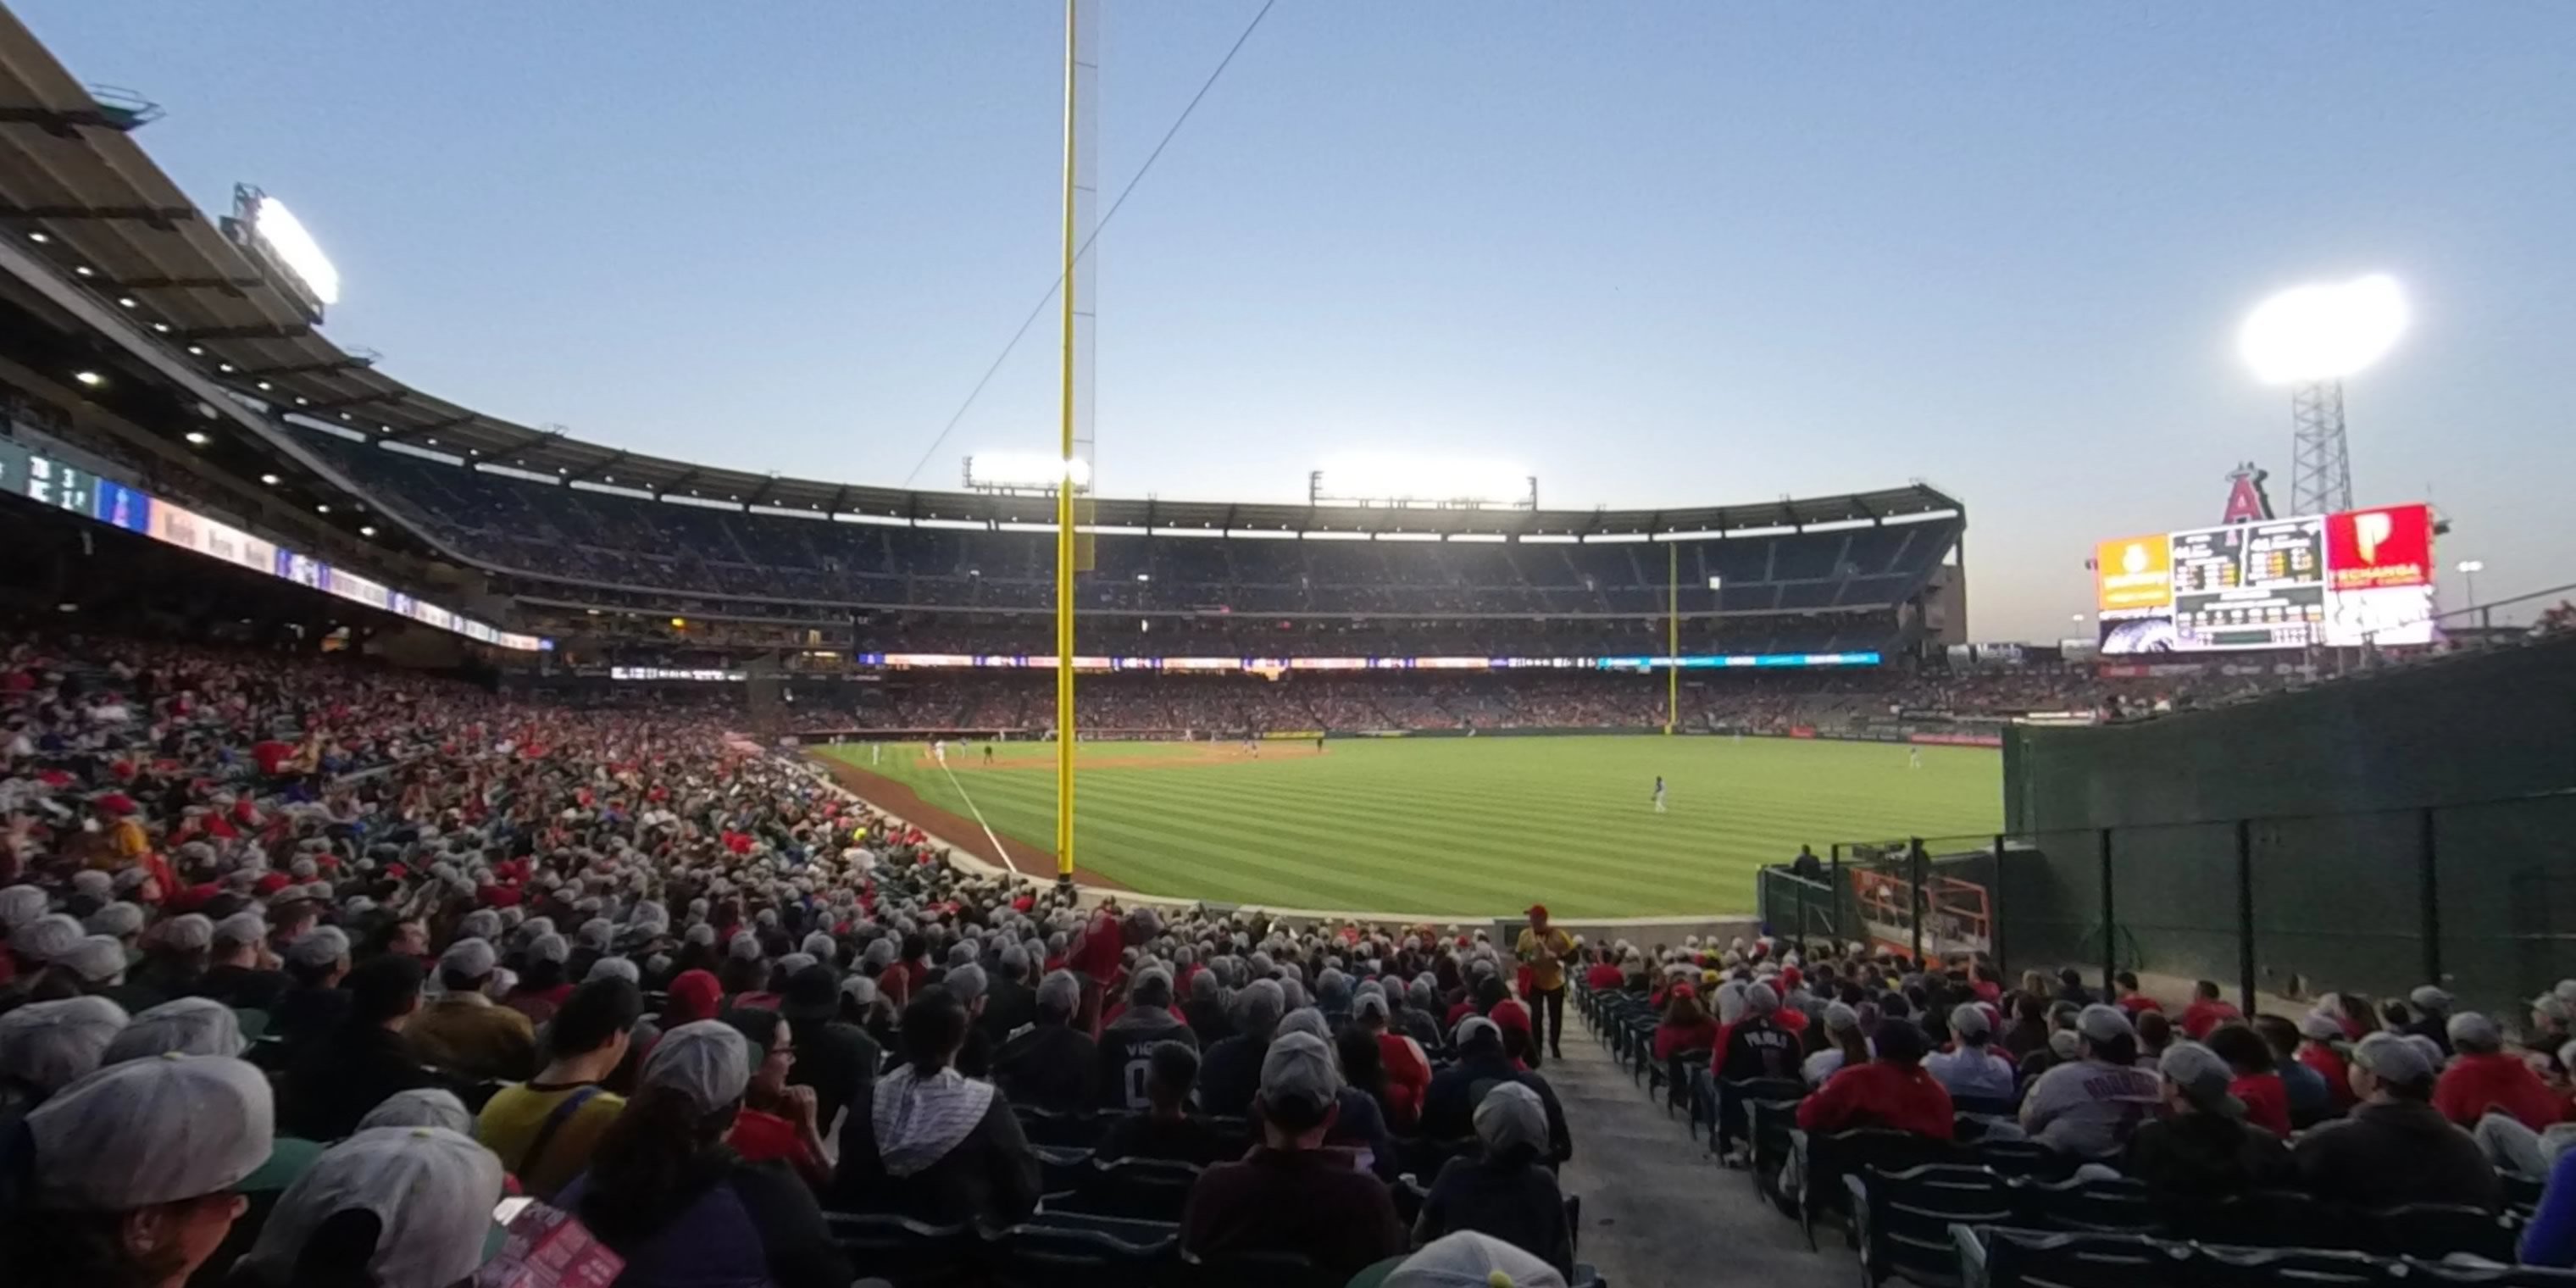 section 134 panoramic seat view  - angel stadium